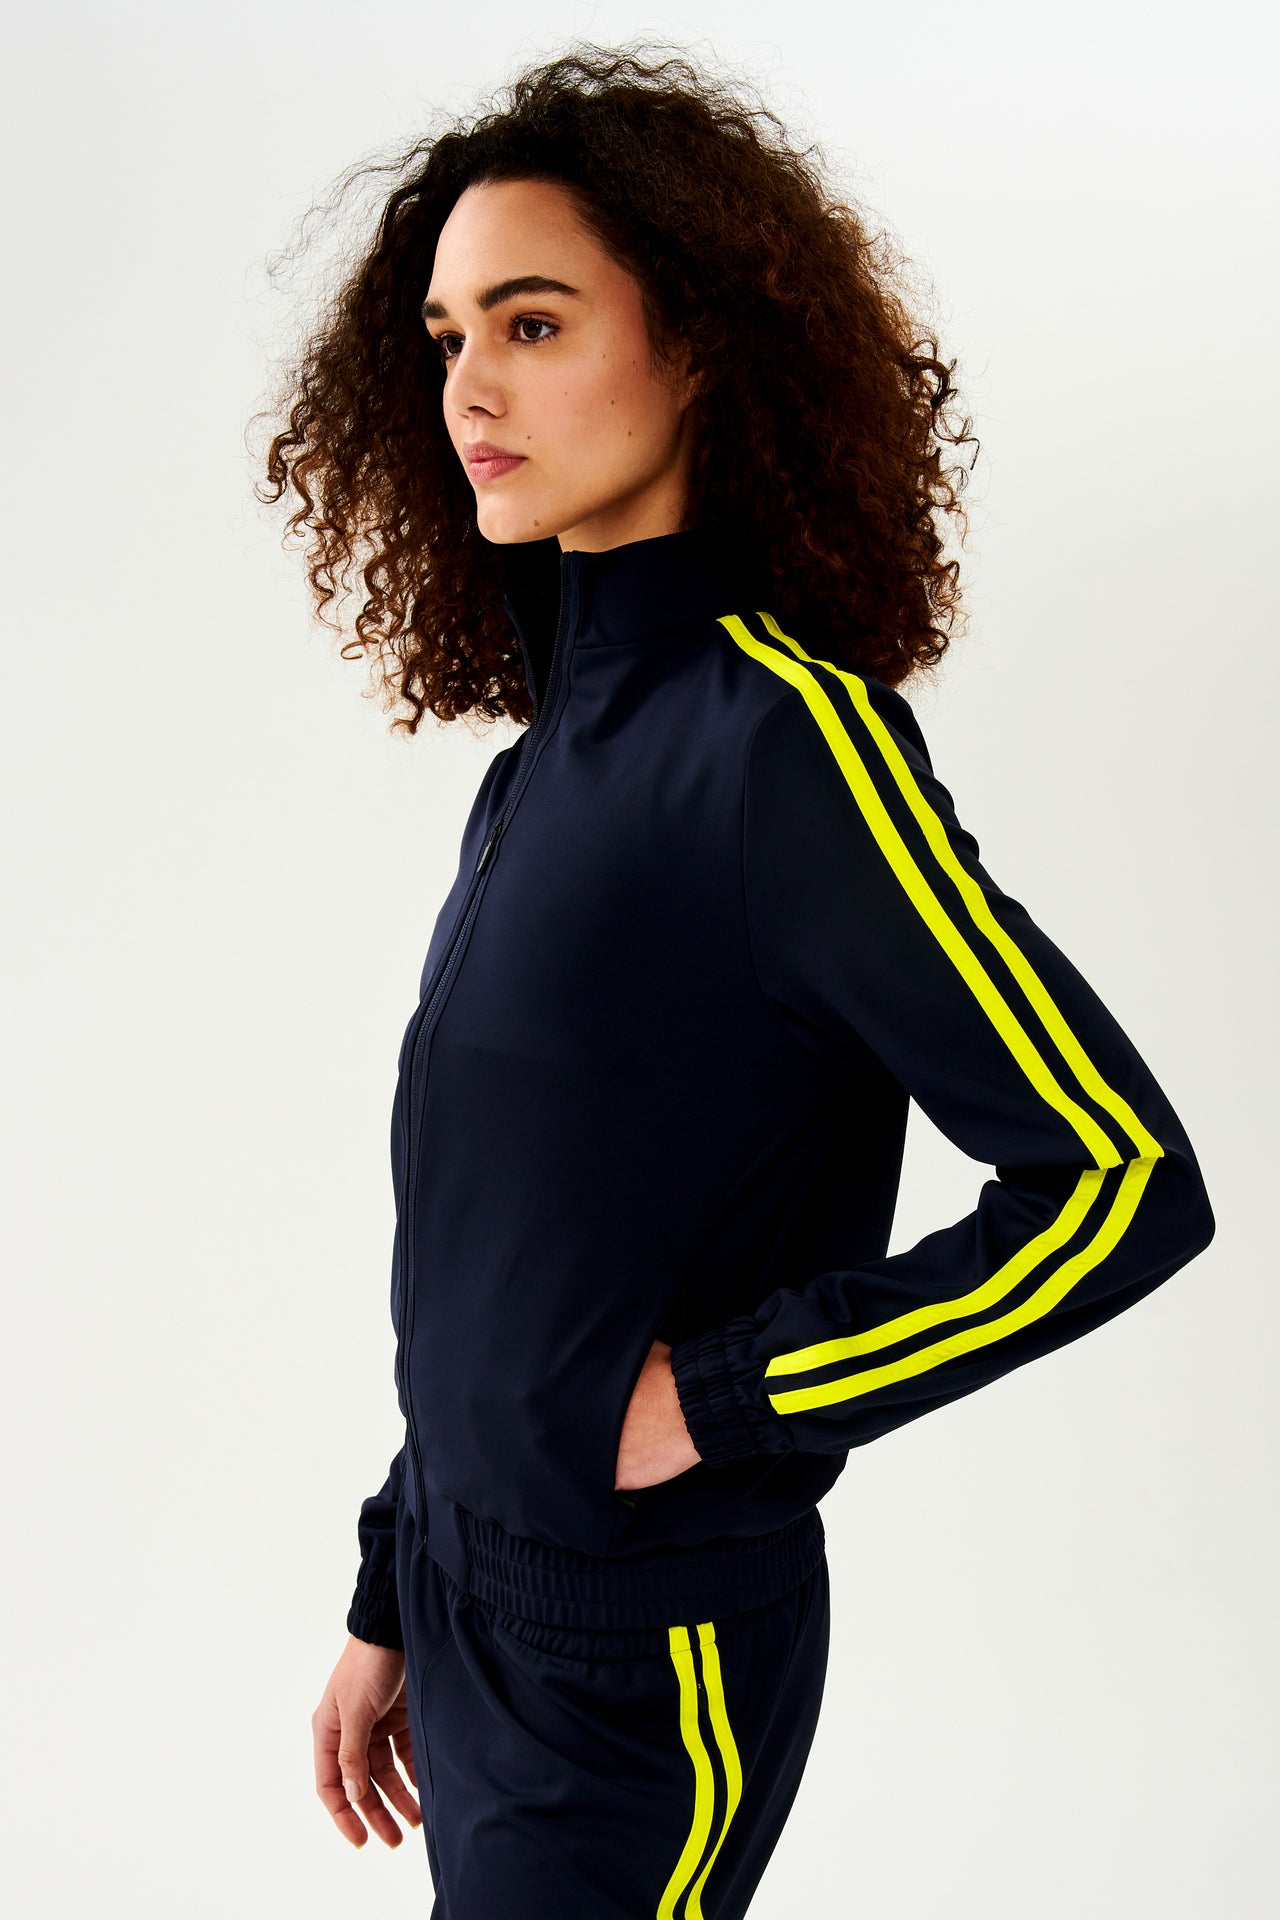 A woman wearing a luxurious Fox Techflex Jacket in Indigo/Chartreuse, ideal as an après workout piece by SPLITS59.